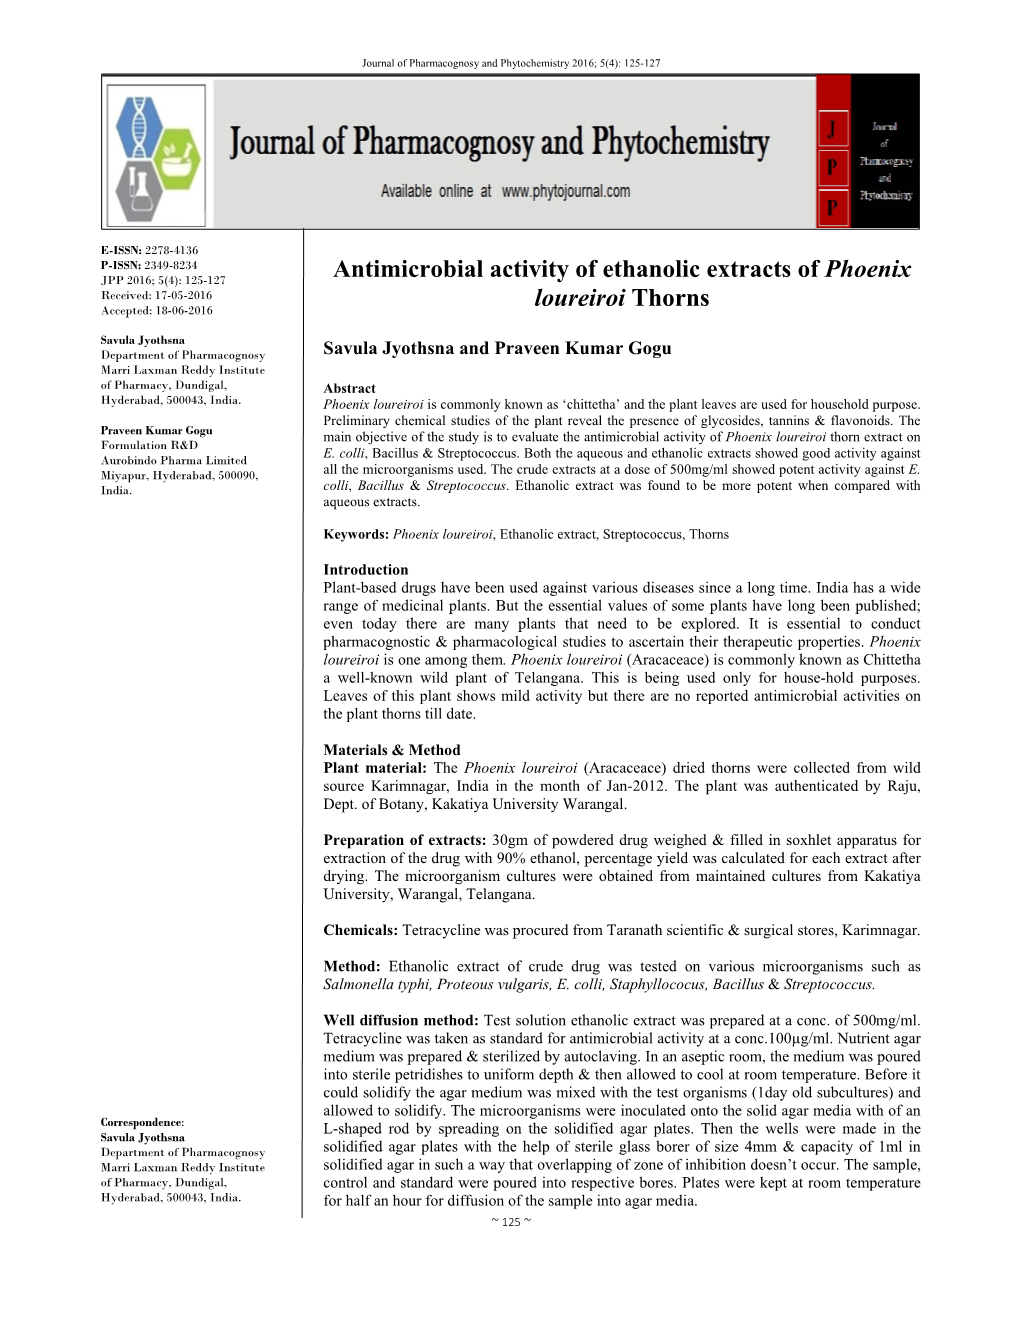 Antimicrobial Activity of Ethanolic Extracts of Phoenix Loureiroi Thorns